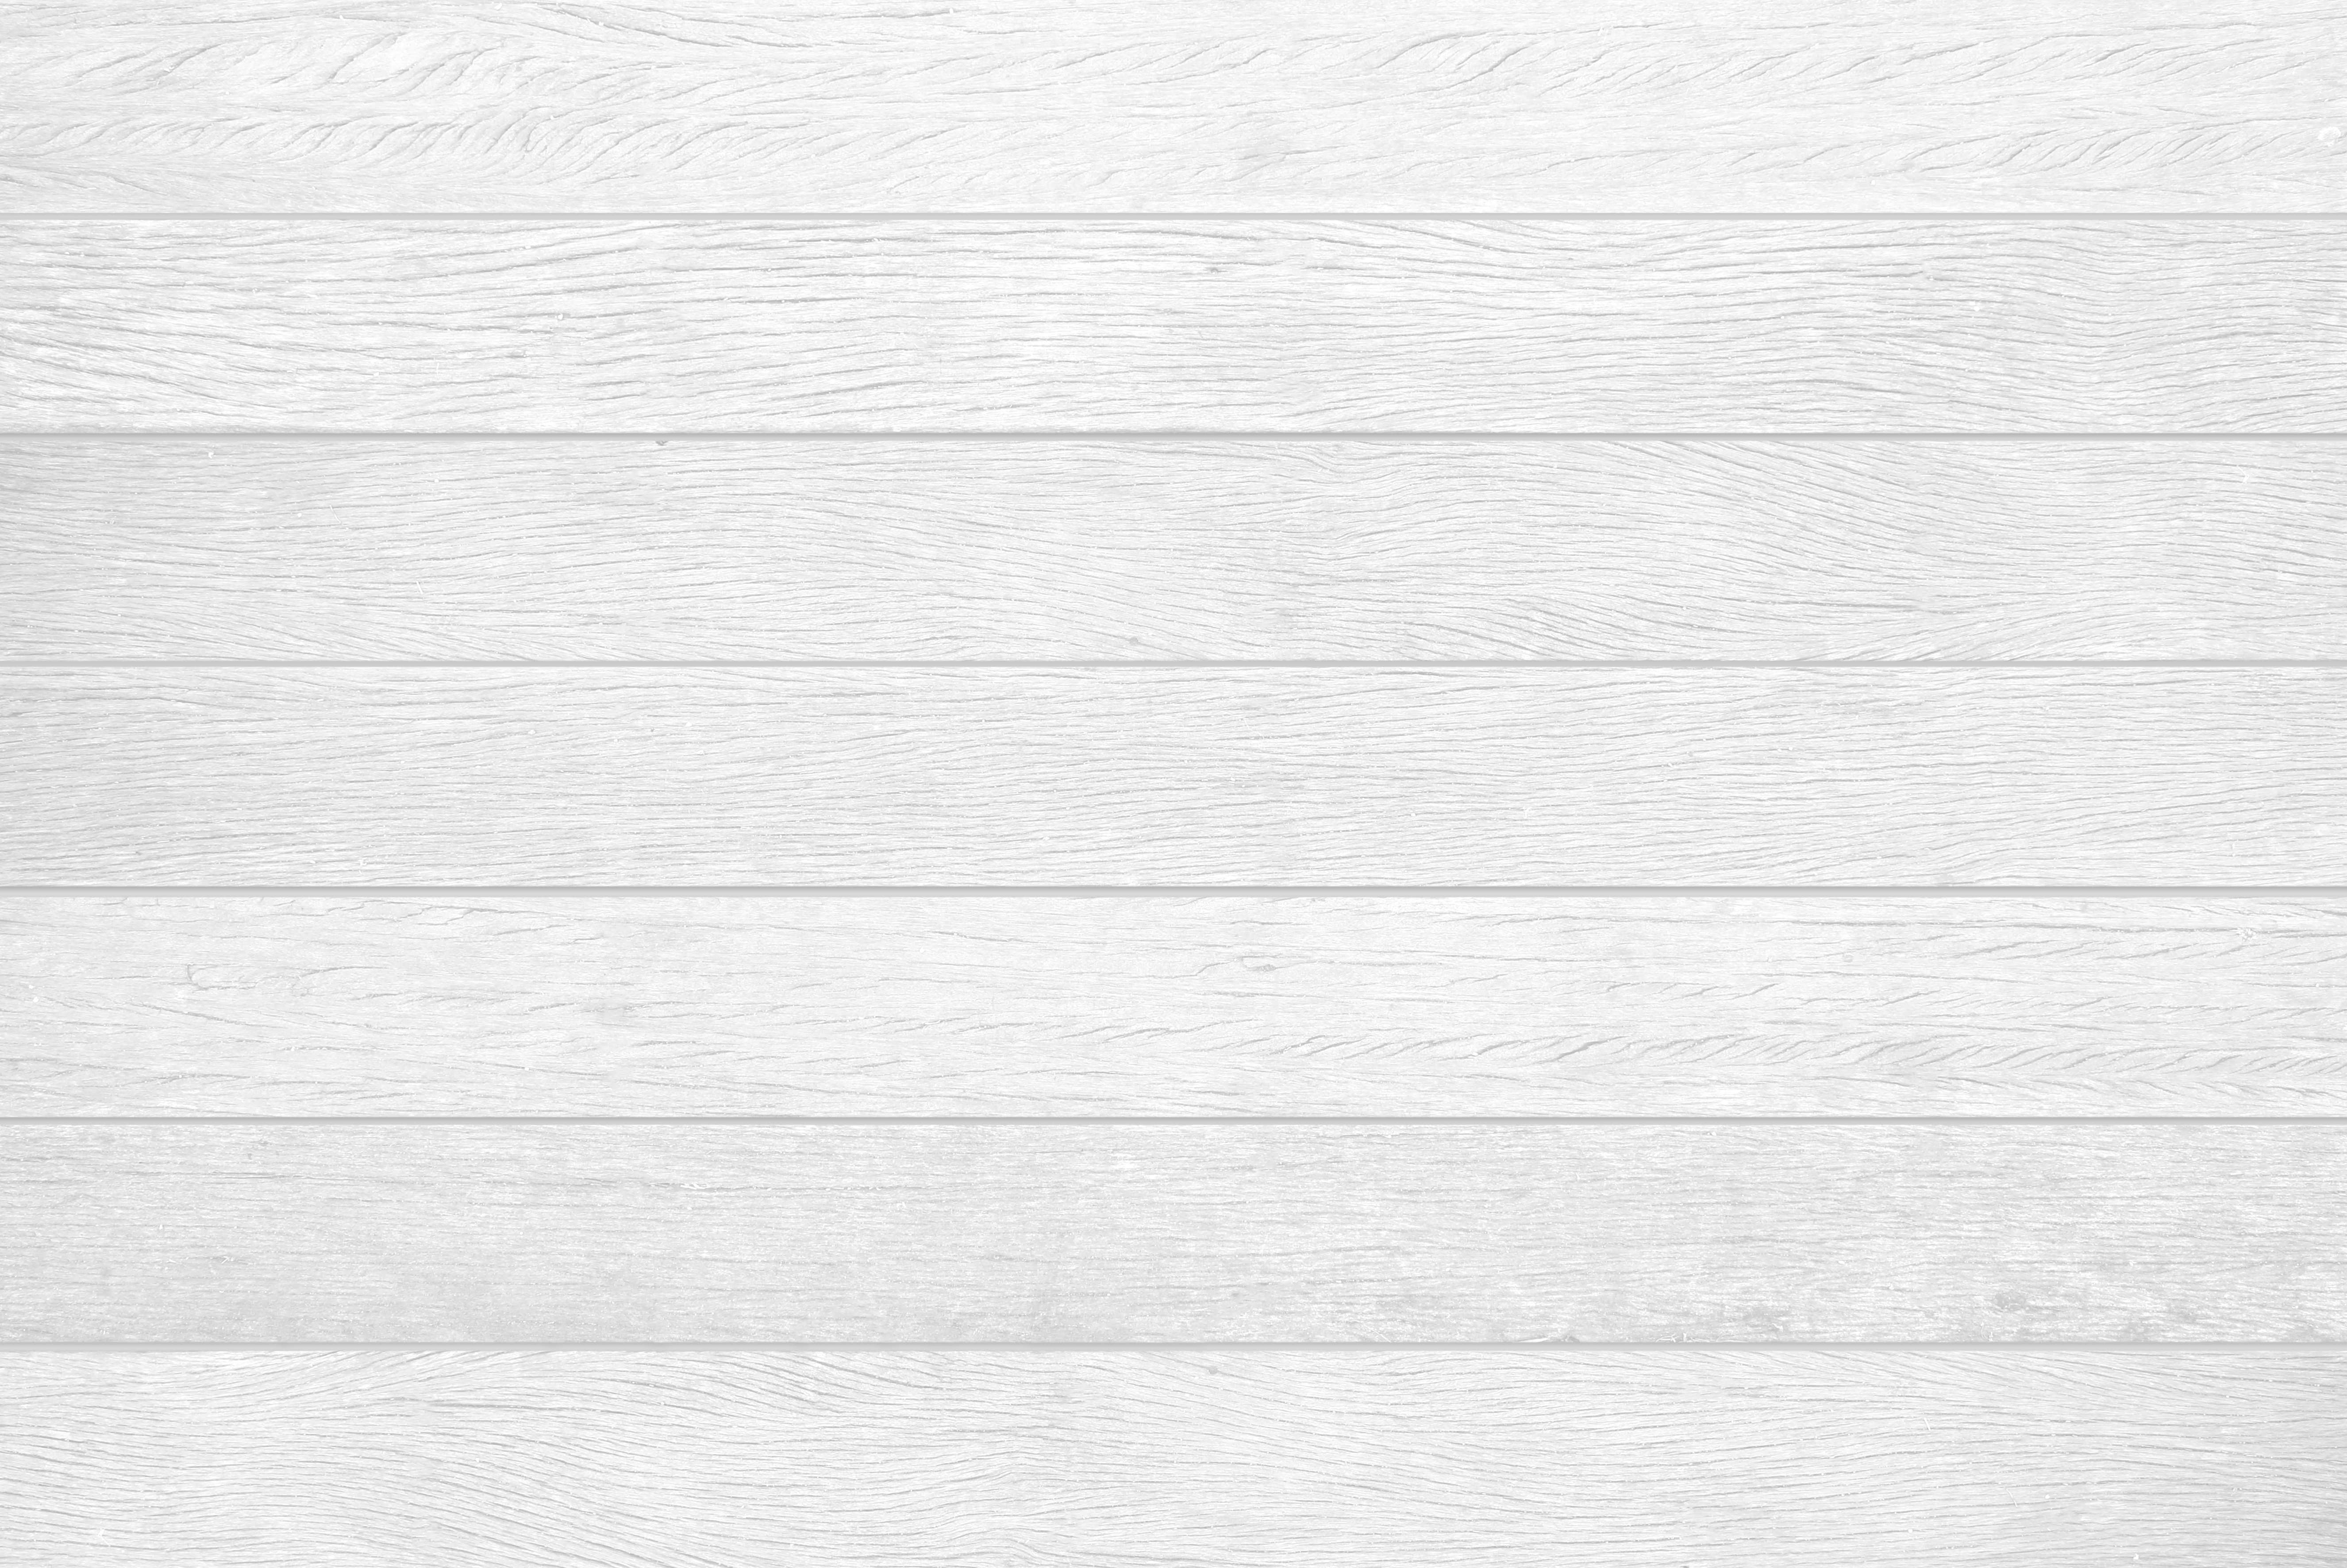 White Wood Plank Seamless Texture Image To U